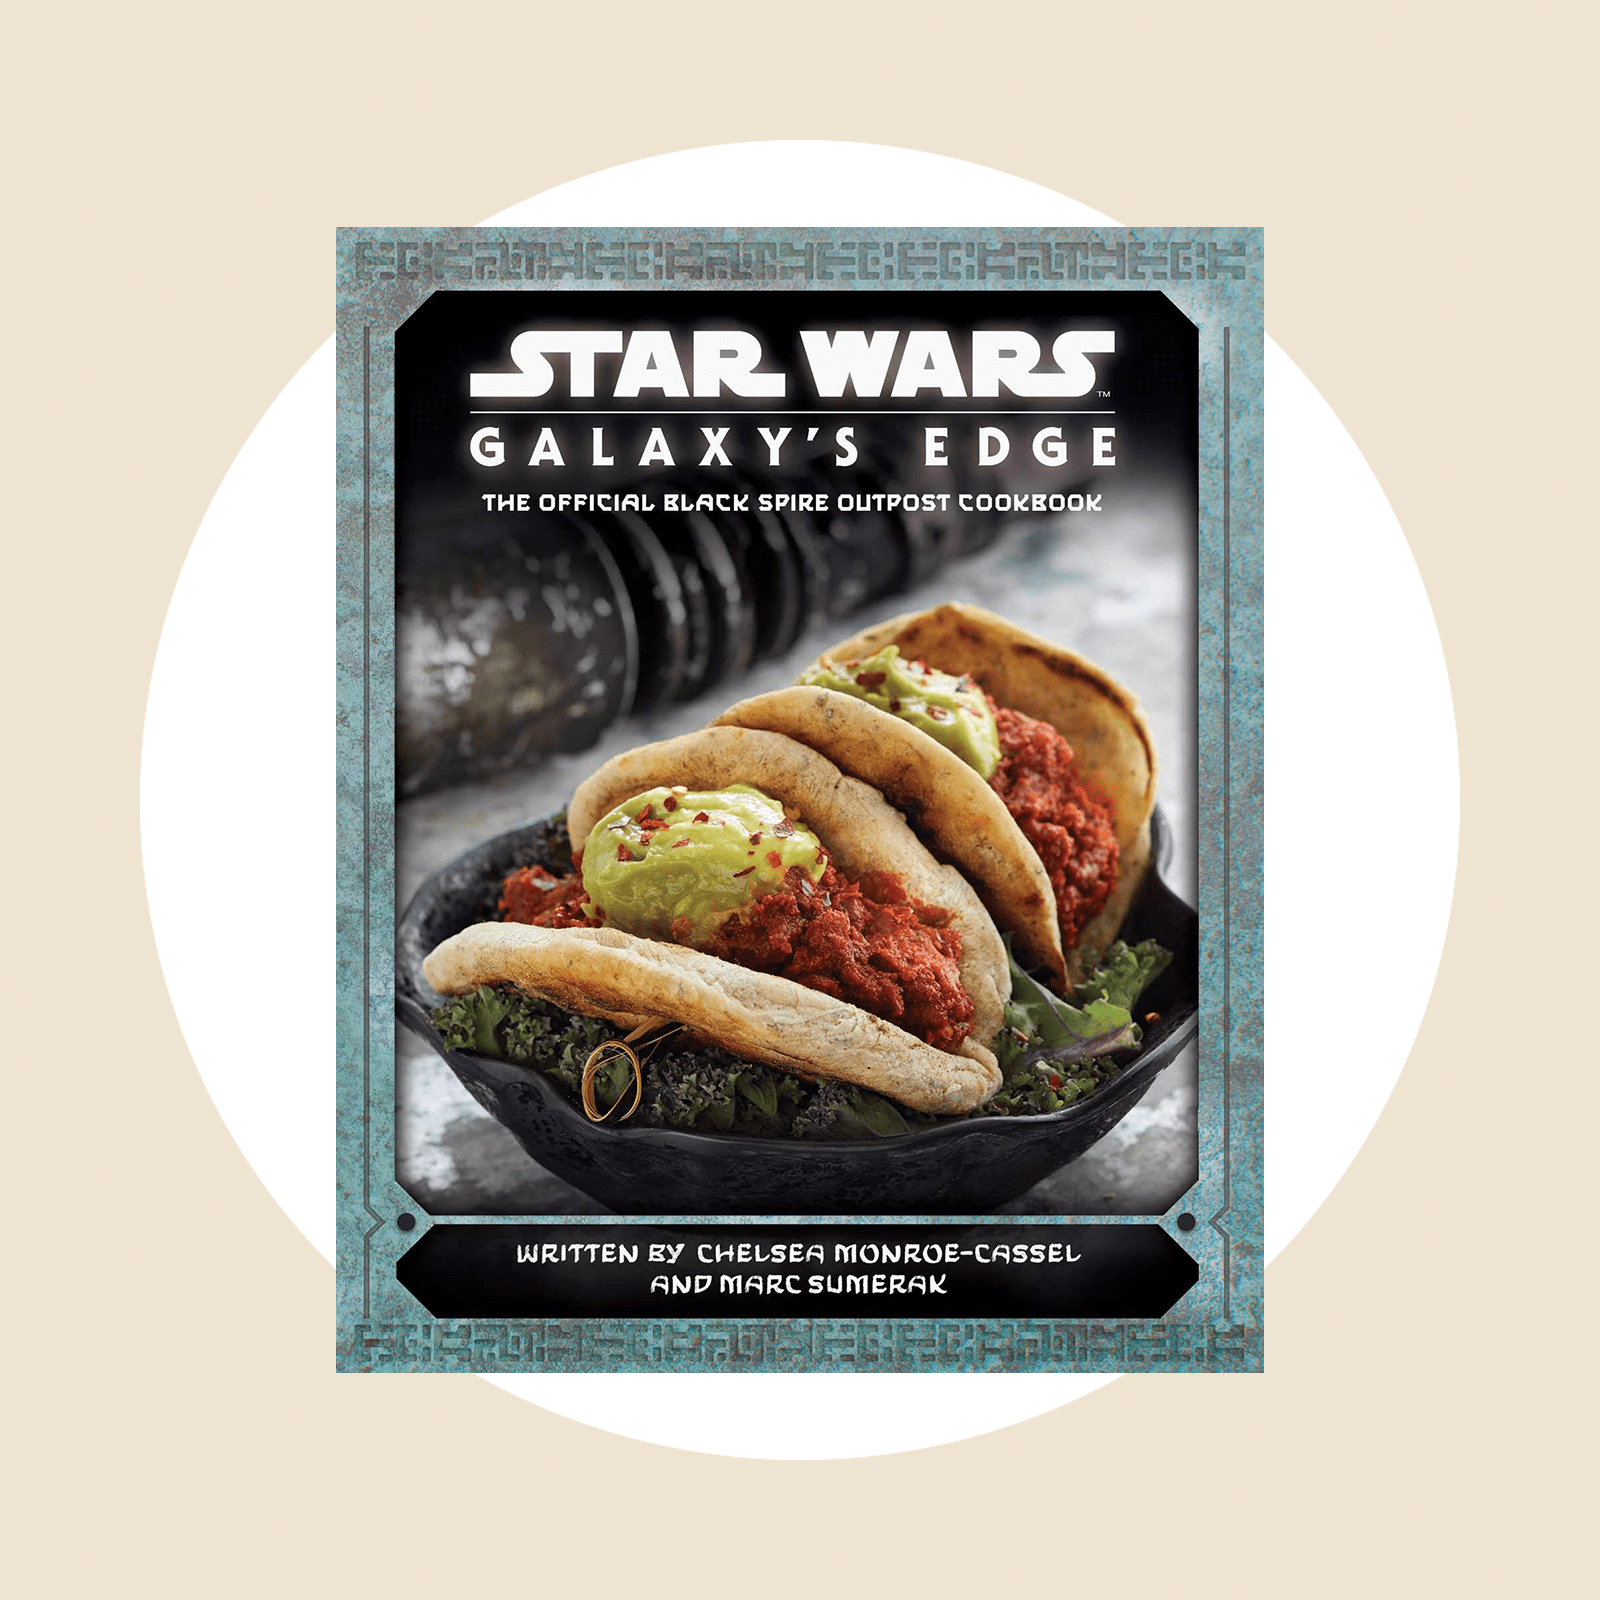 Star Wars Galaxys Edge Cookbook Ecomm Via Amazon.com